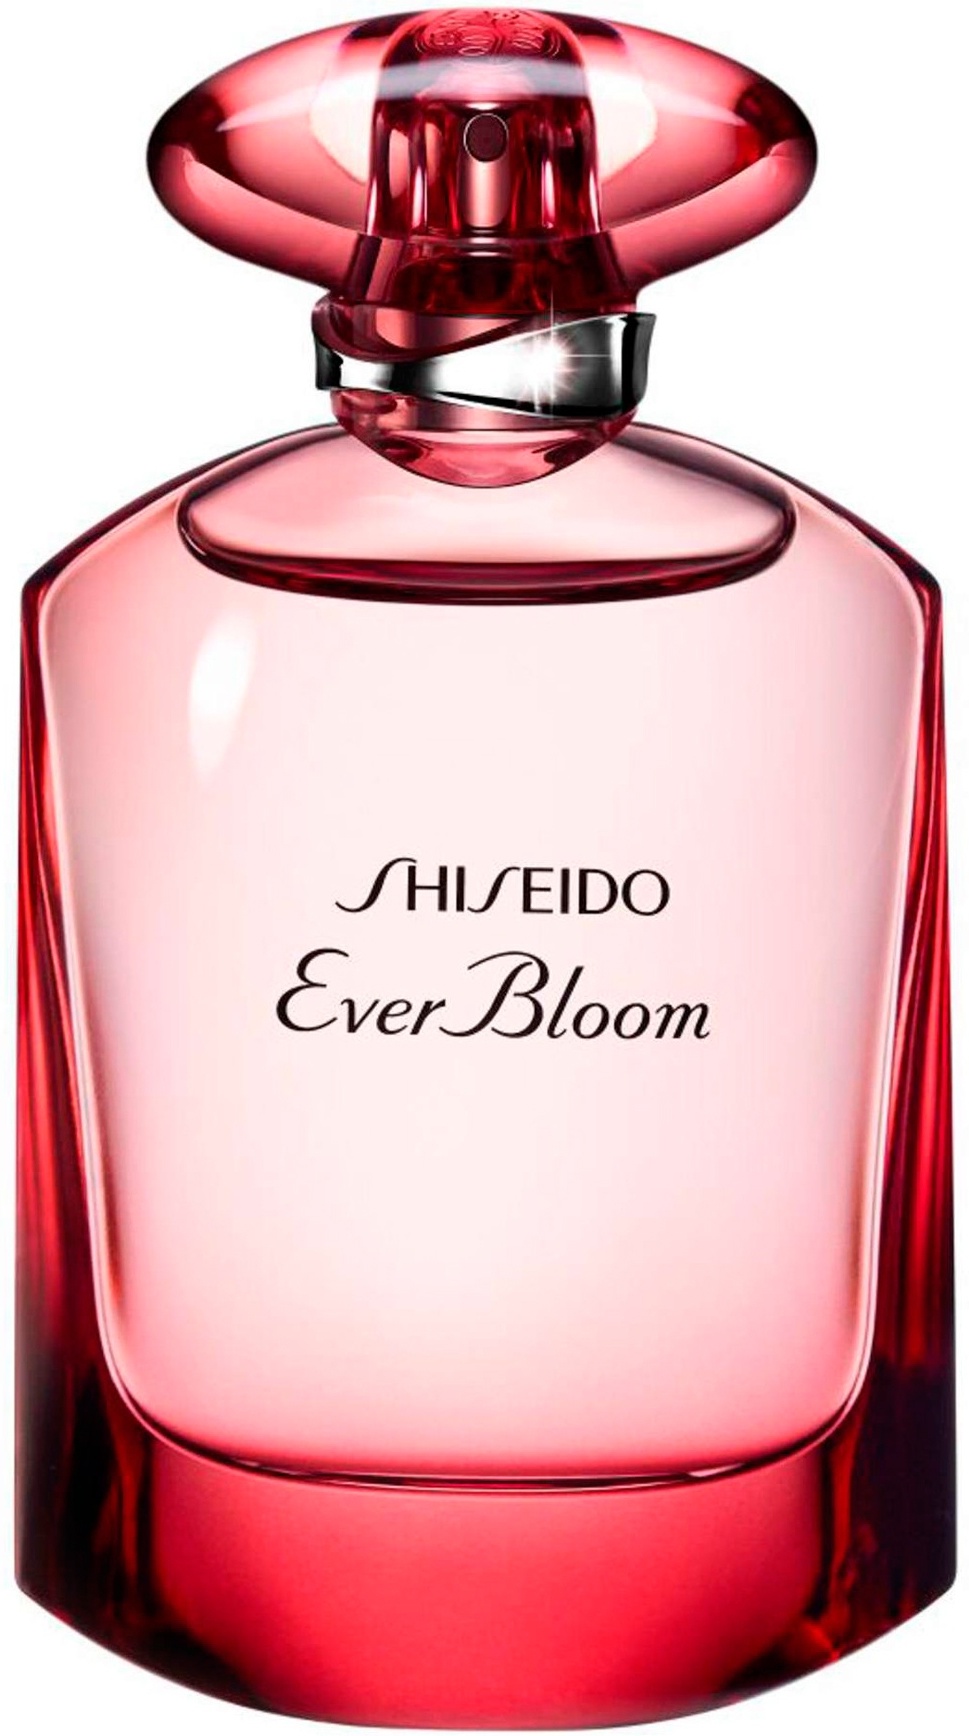 Shiseido парфюм. Духи шисейдо Эвер Блум. Туалетная вода шисейдо Эвер Блум. Евери Блюм шоссейдо духи. Парфюмерная вода Shiseido ever Bloom.